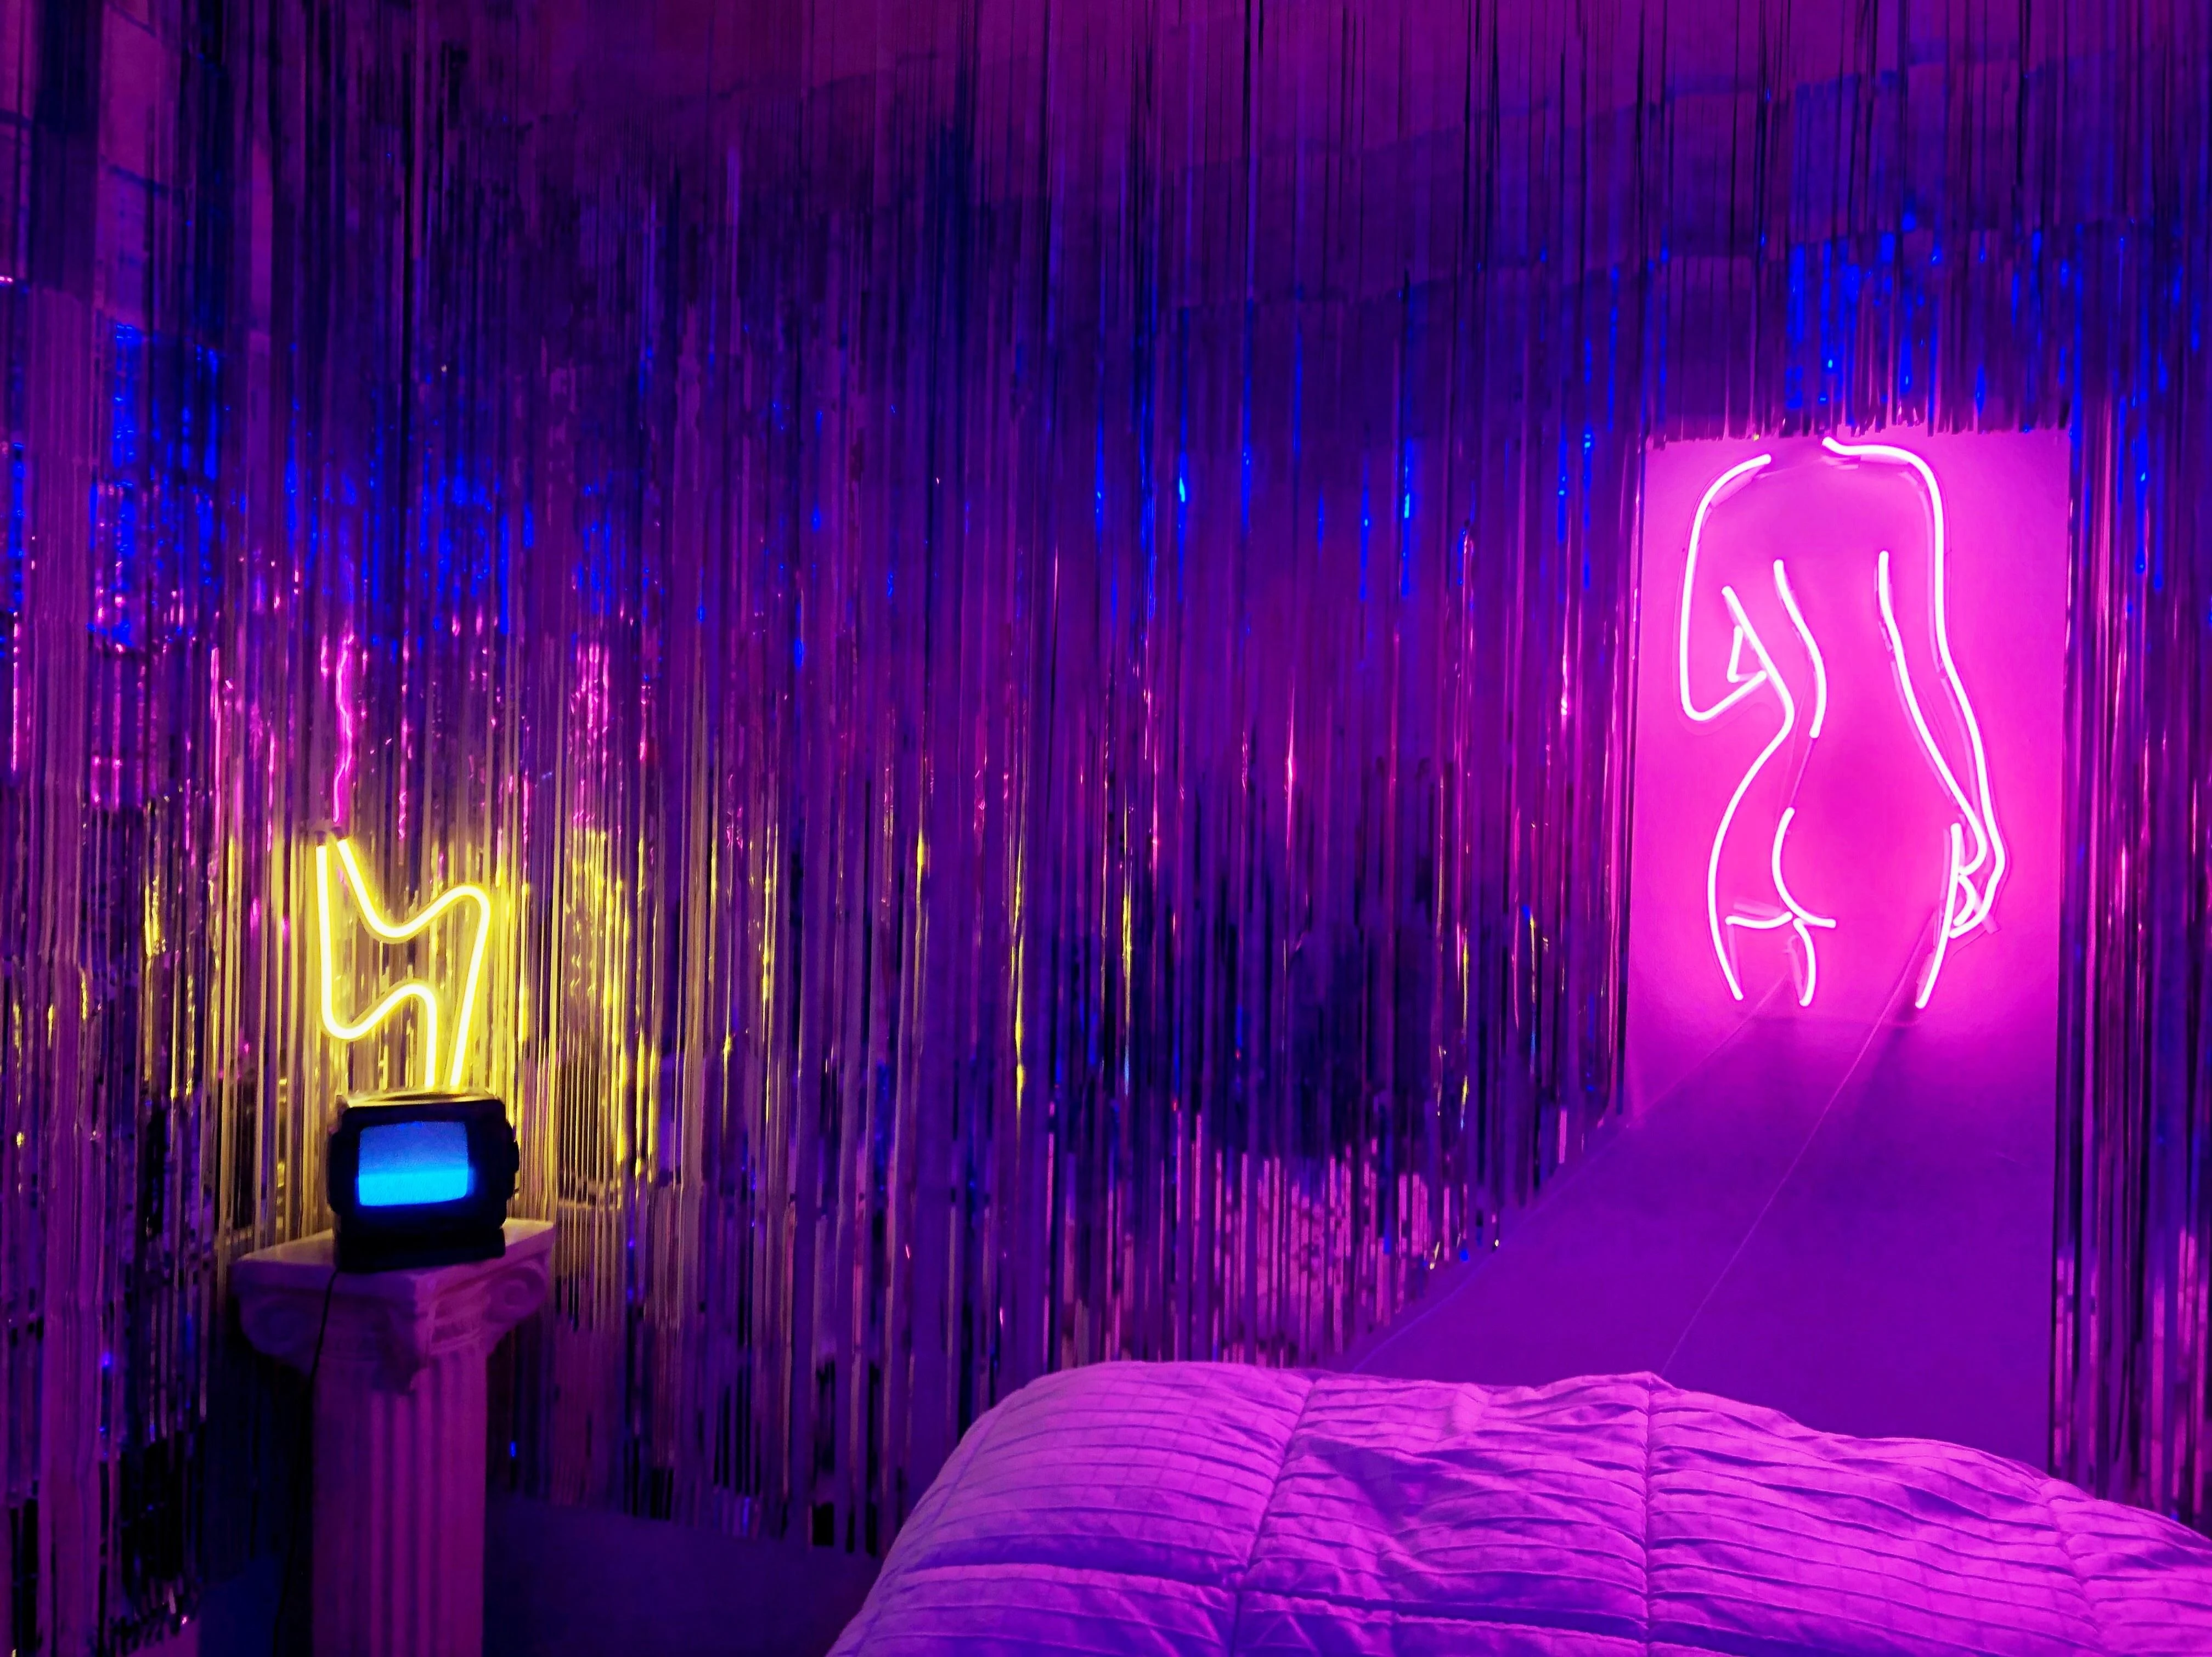 DC 12V hot design home bedroom decoration custom body neon lights, led neon sign body